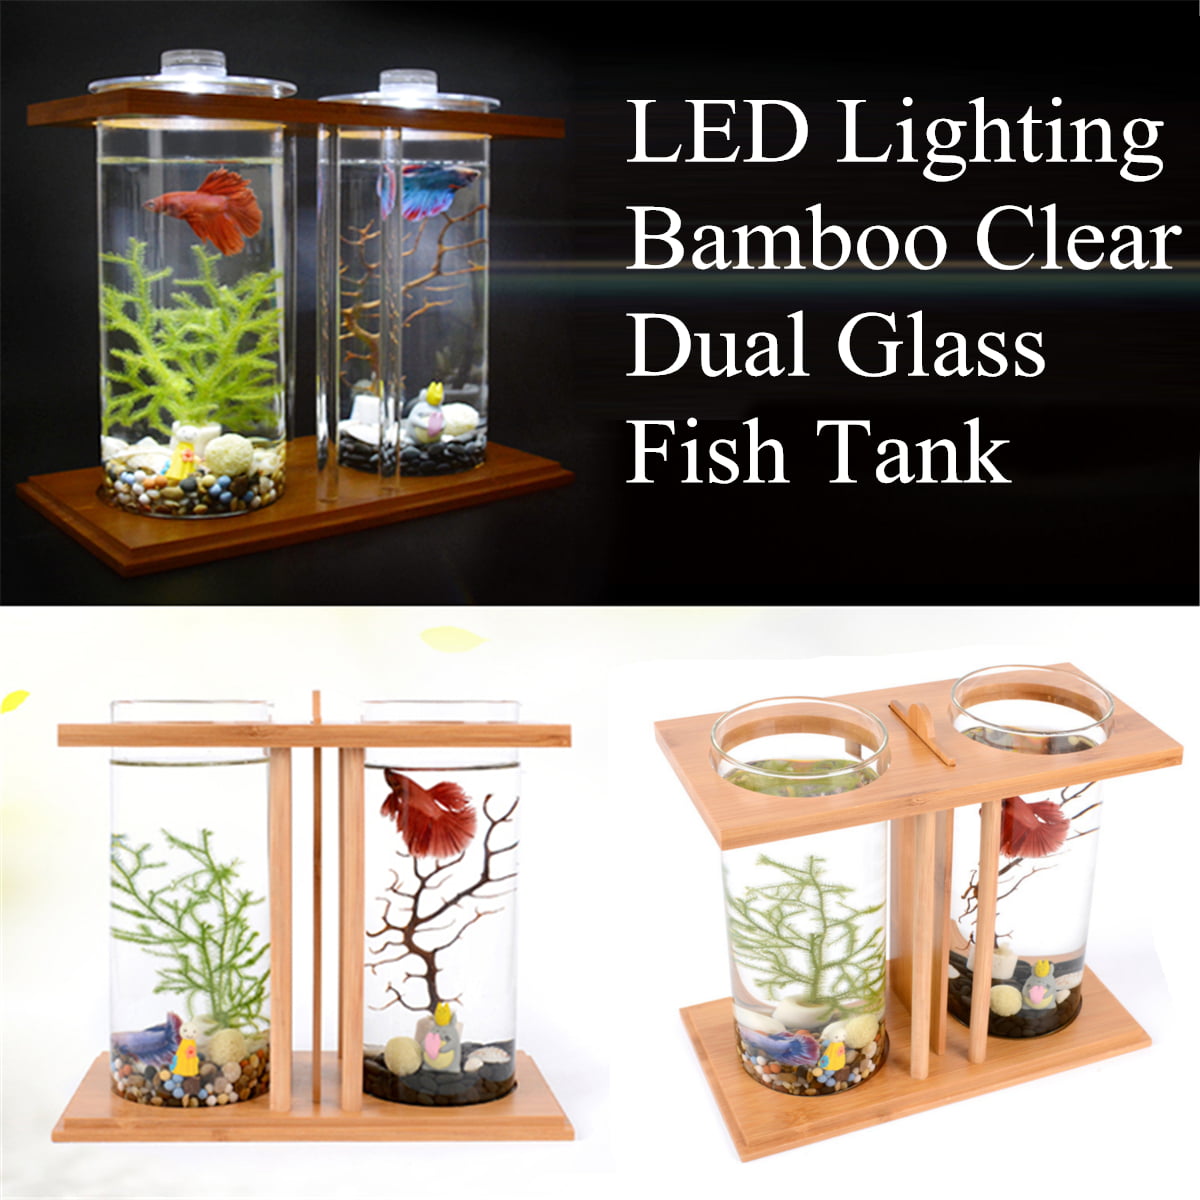 Hot LED Light Dual Clear Glass Fish Tank Betta Aquarium